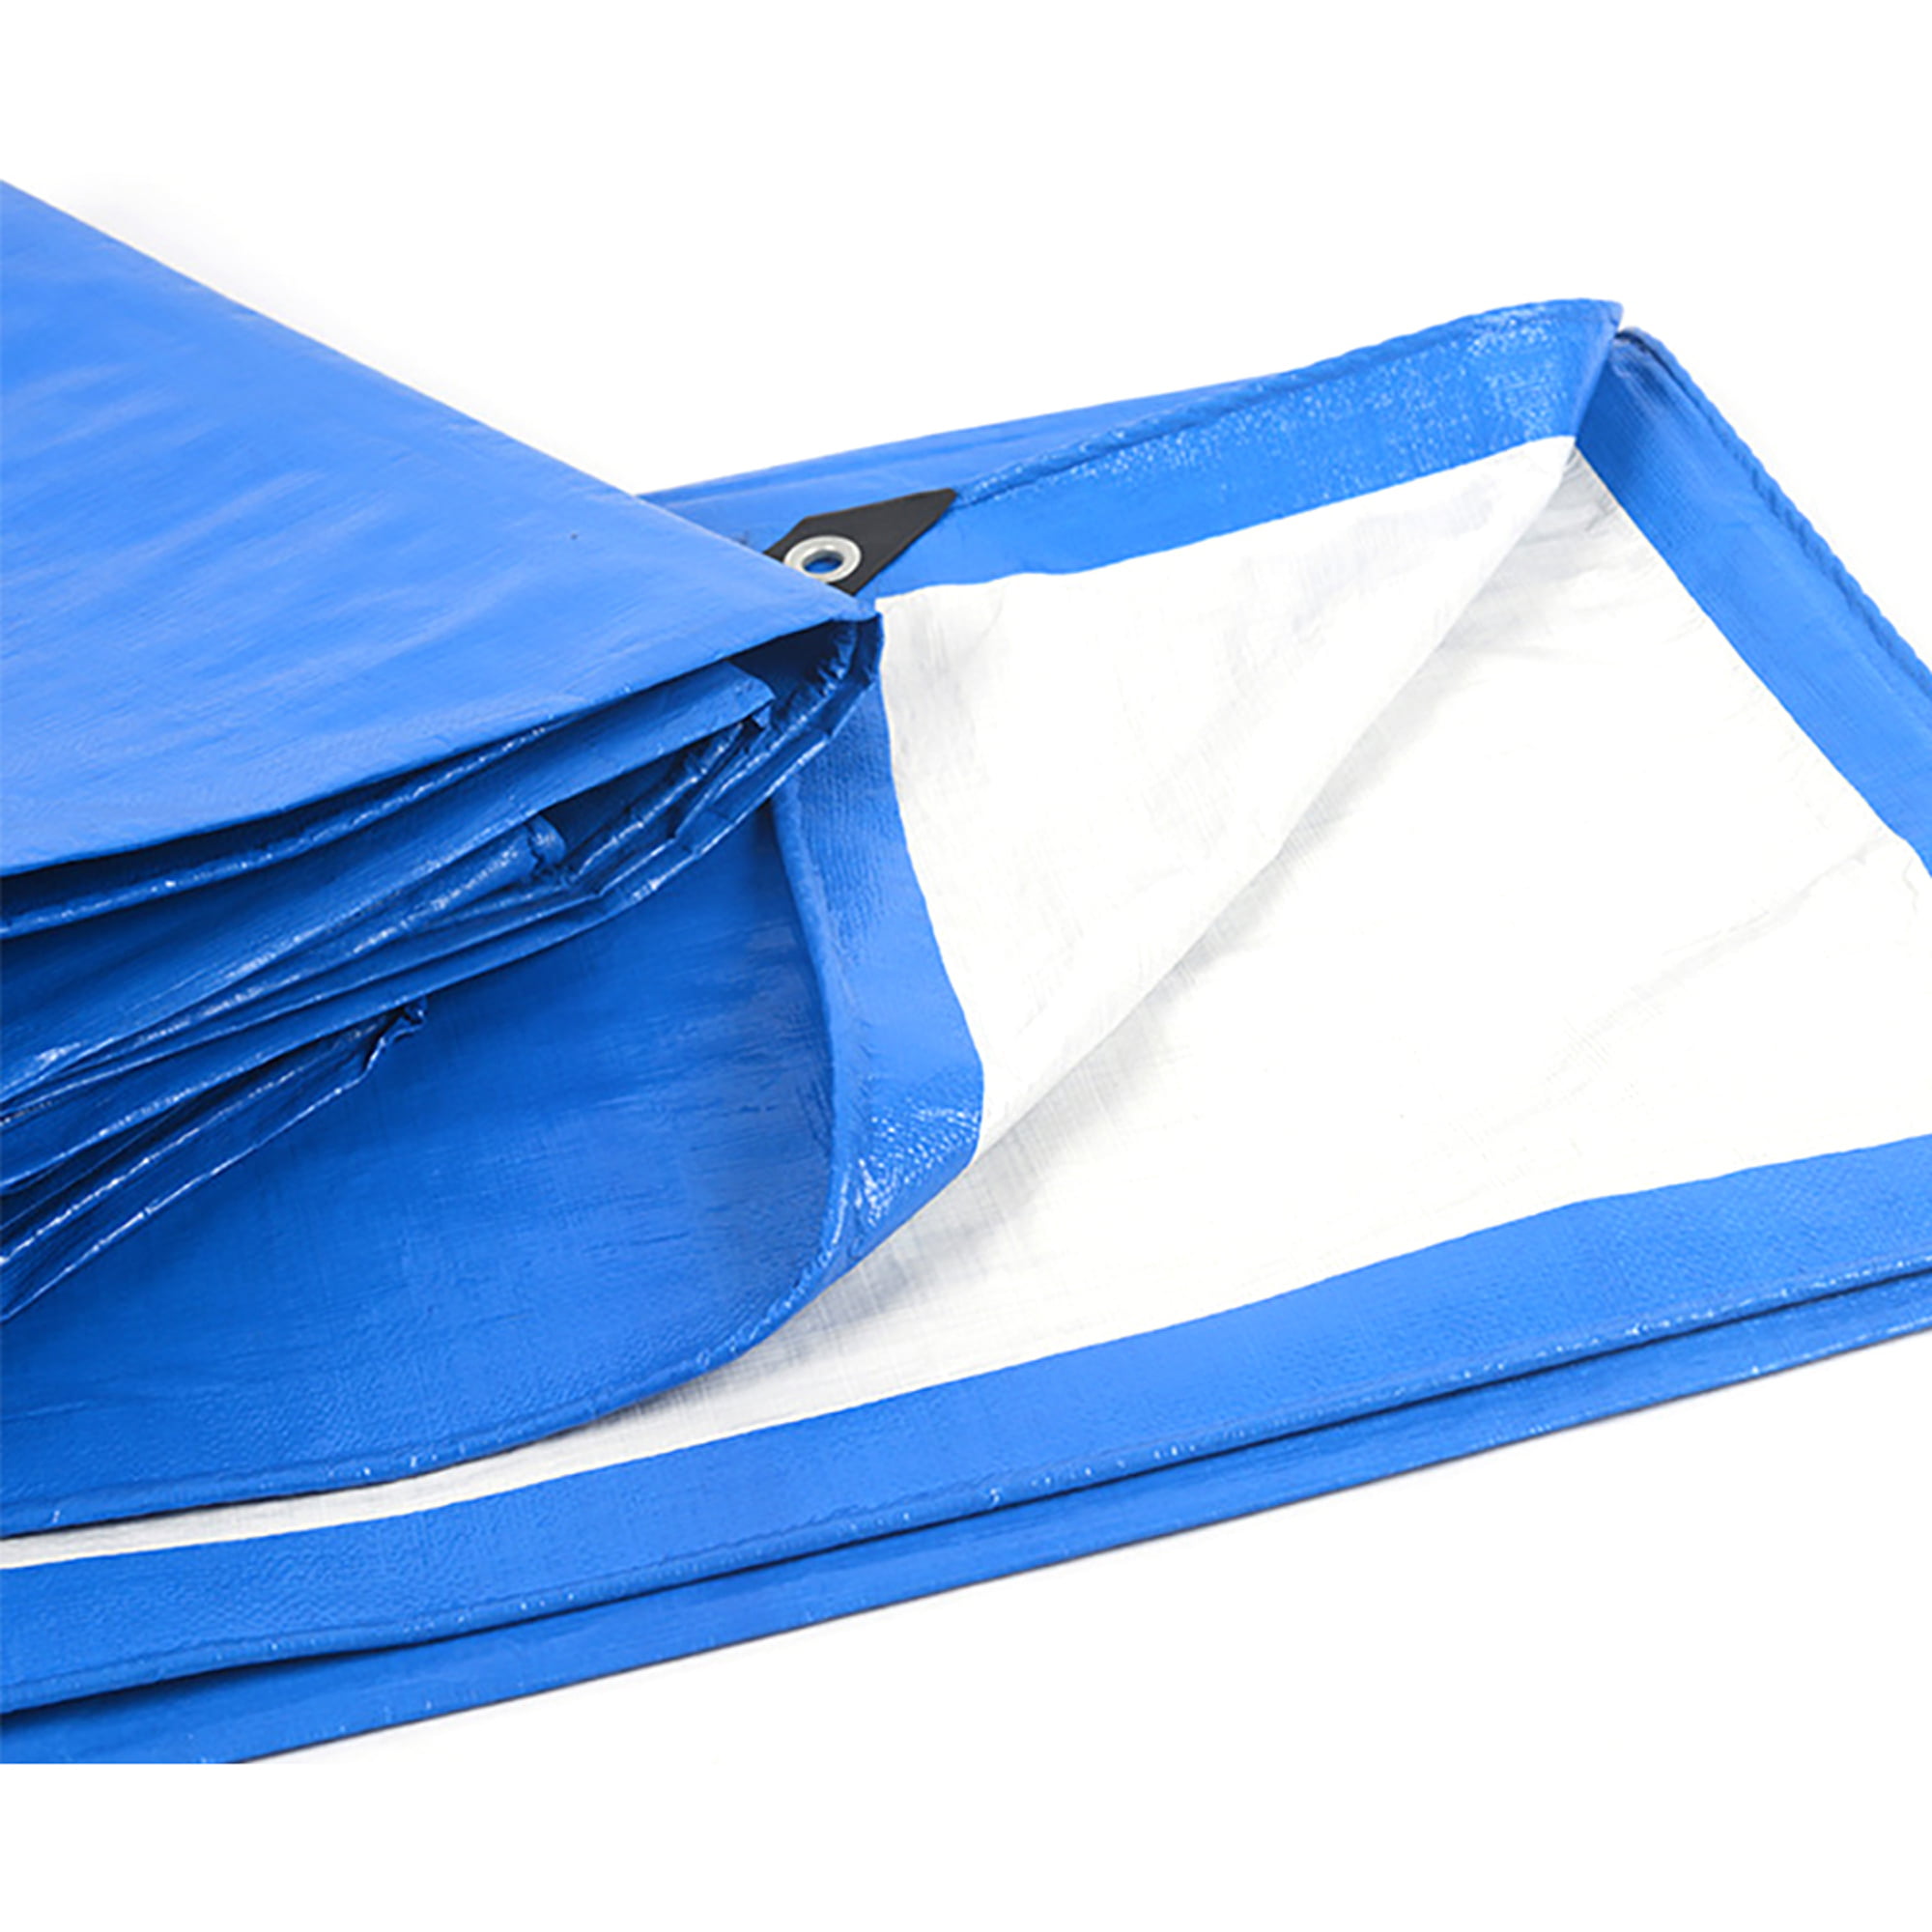 Waterproof Tarpaulin Ground Sheet Lightweight Heavyduty Camping Cover Protection 